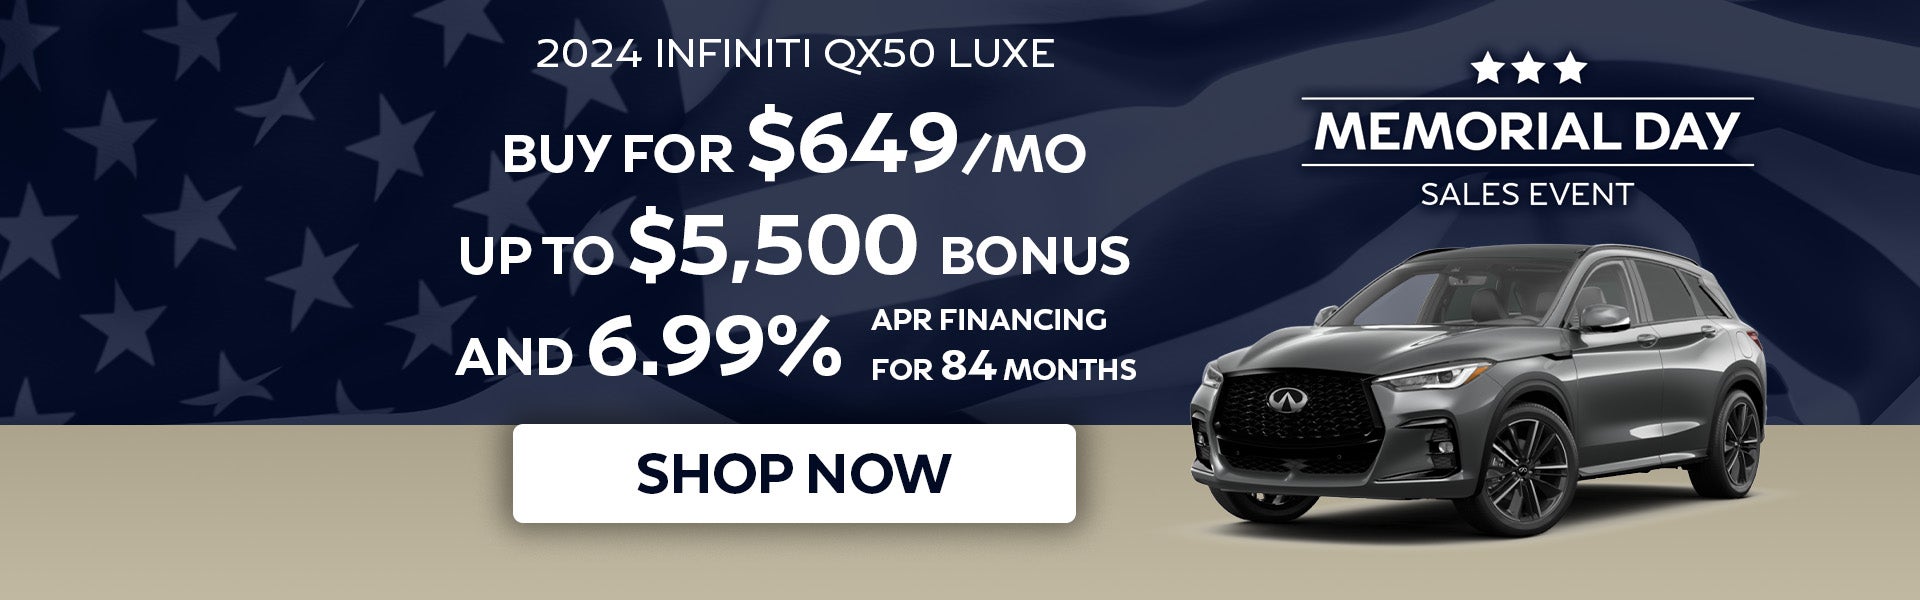 2024 Infiniti QX50 Luxe 